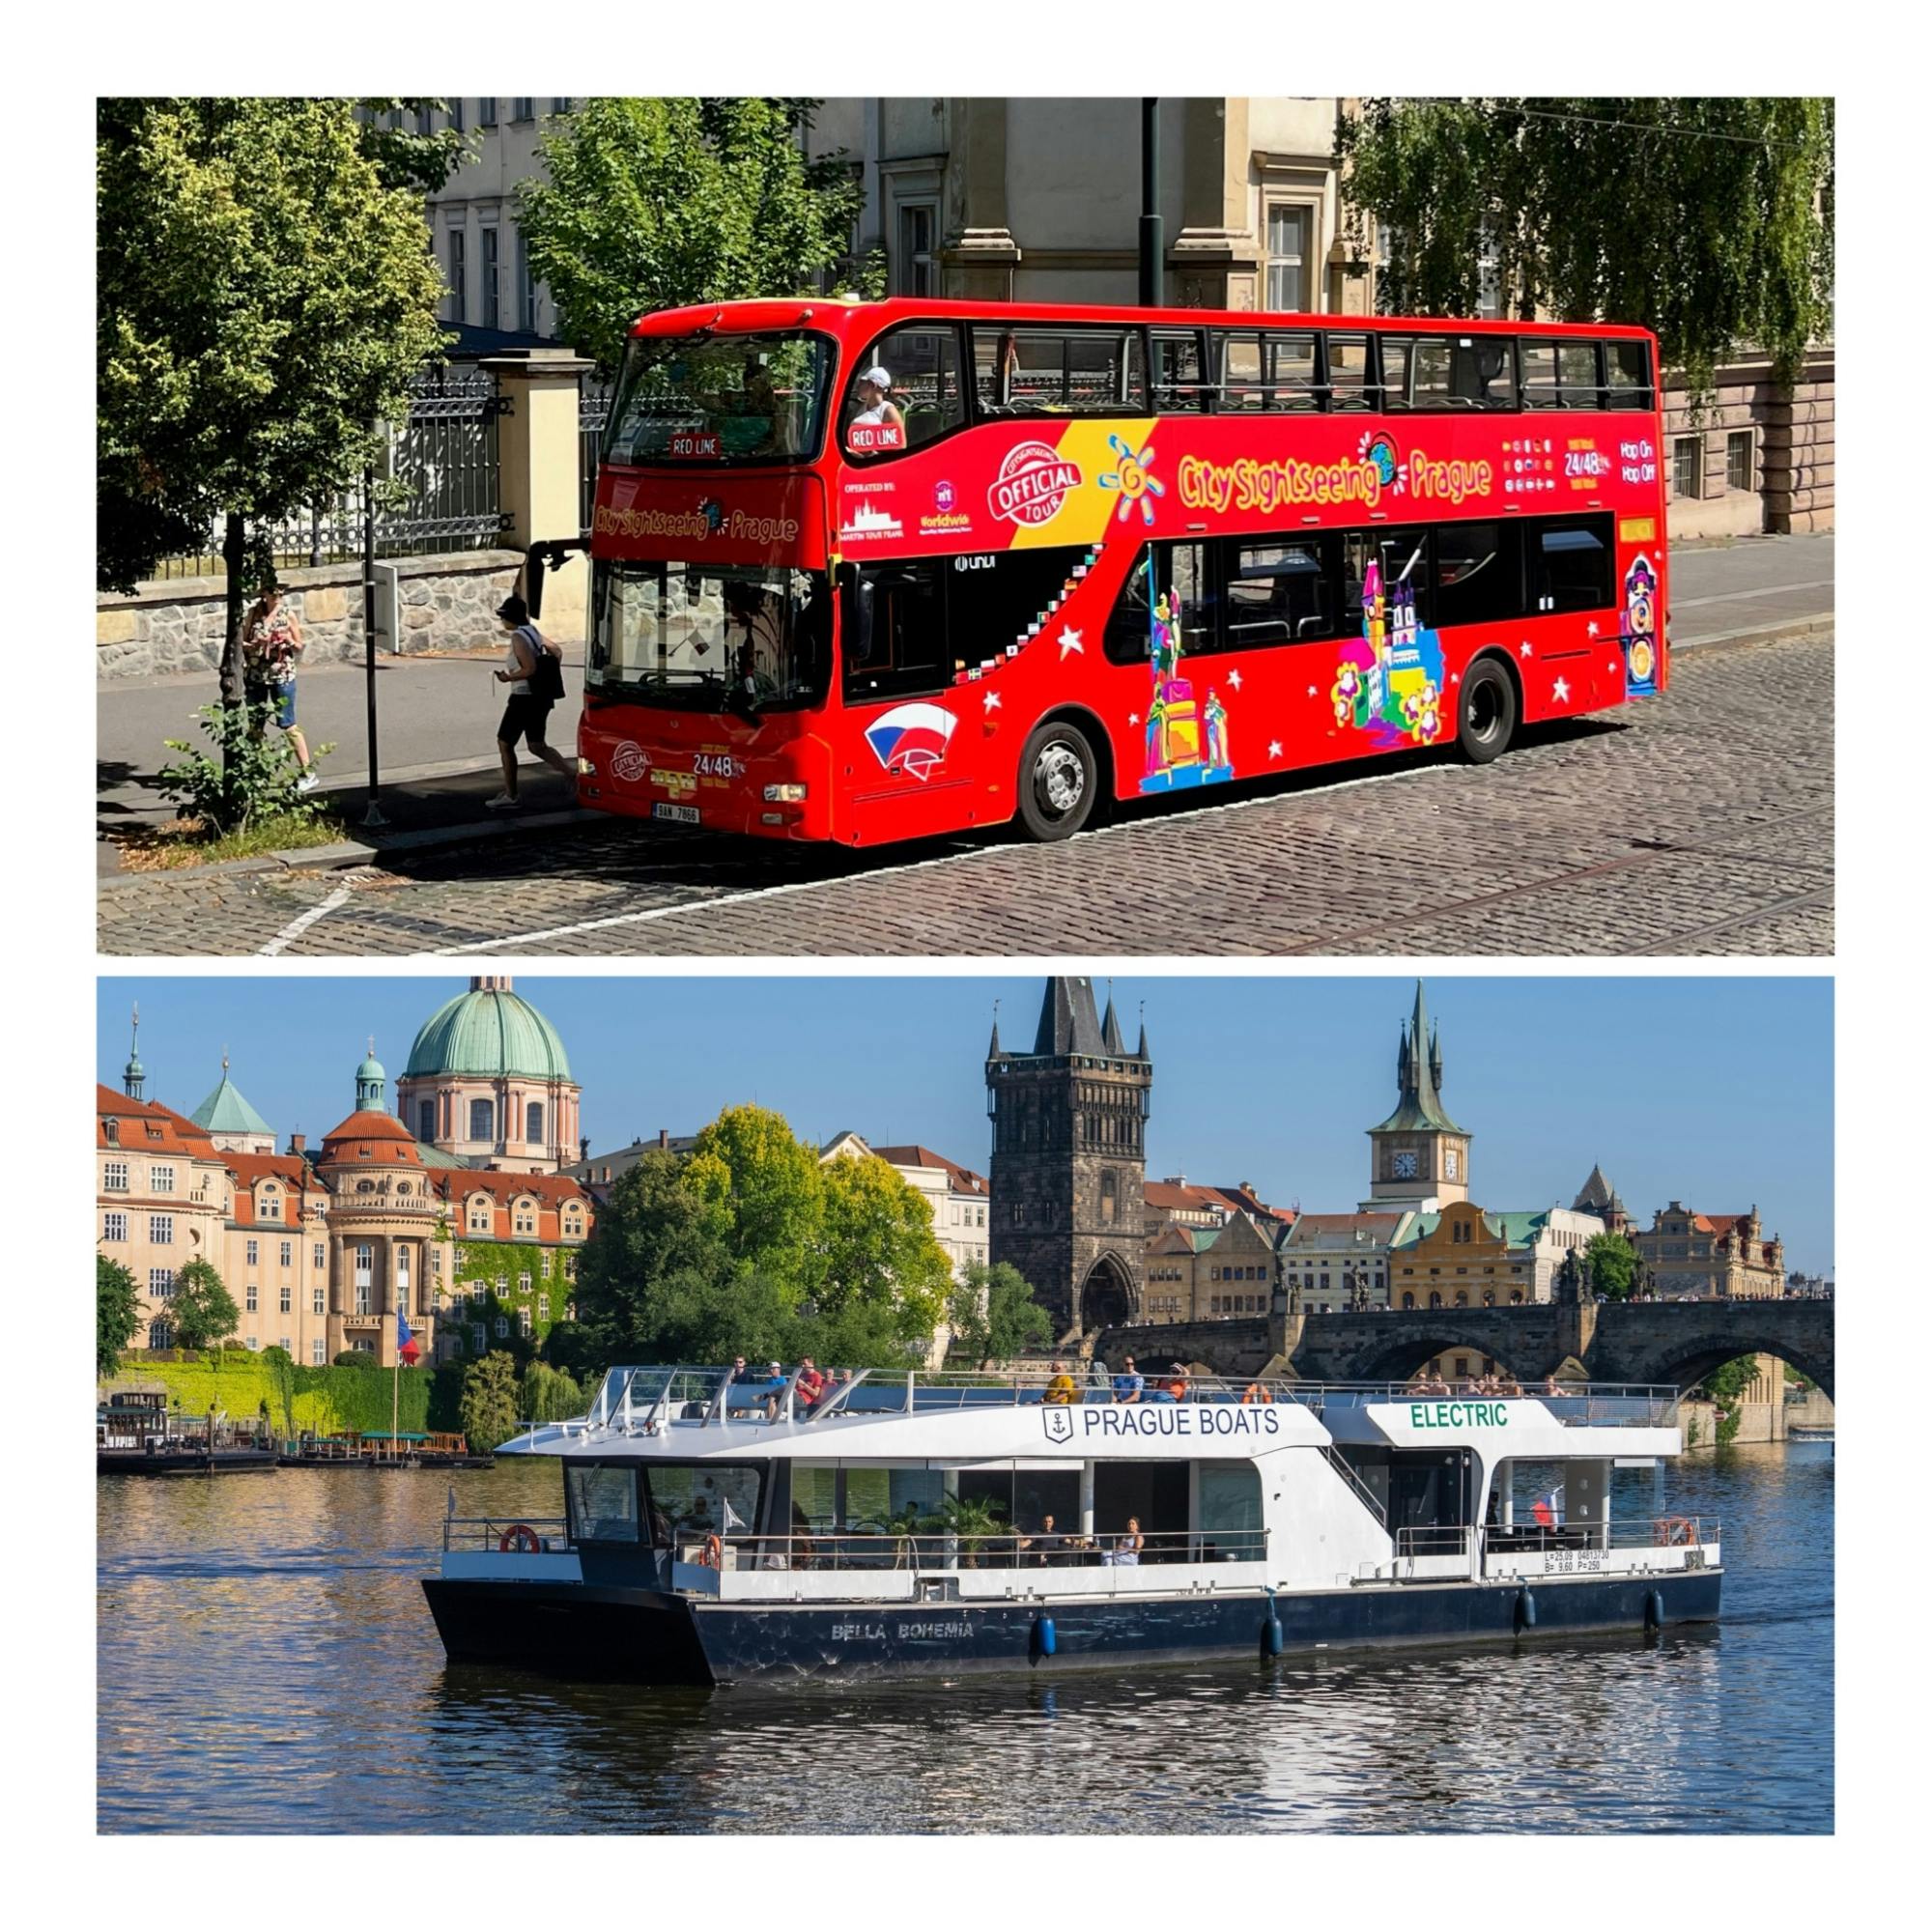 Tour en autobús turístico City Sightseeing por Praga